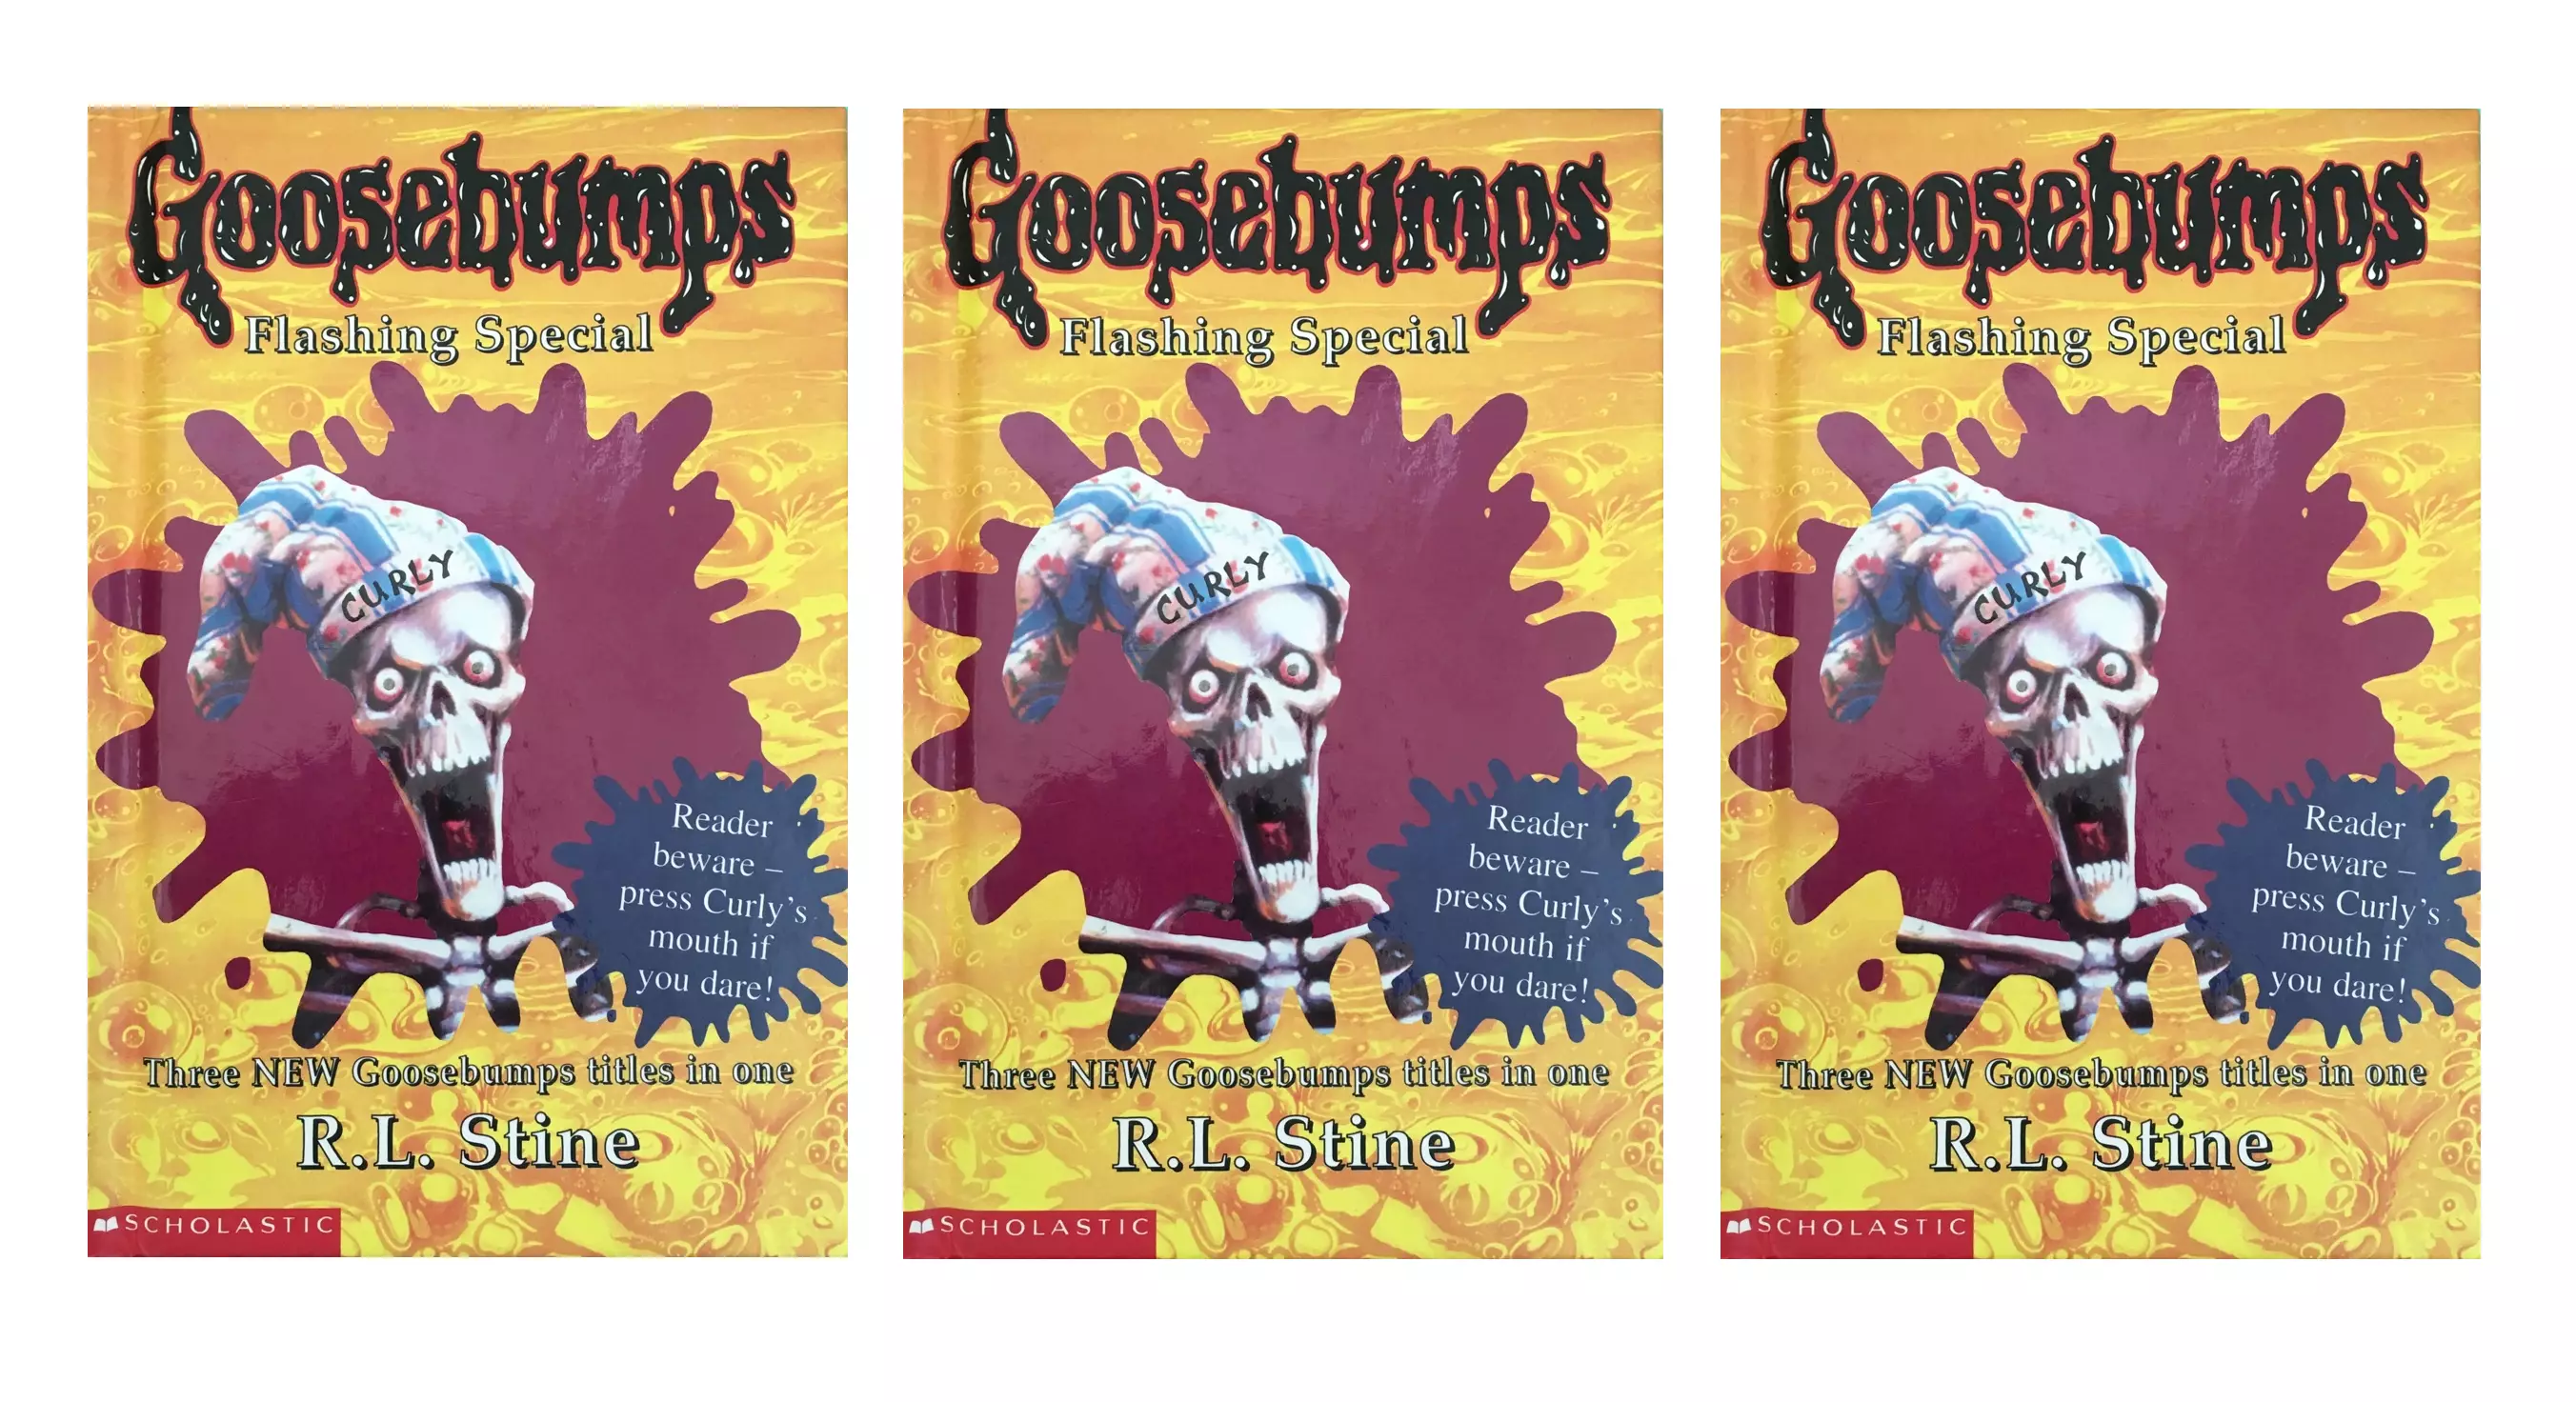 We grew up reading the 'Goosebumps' books (